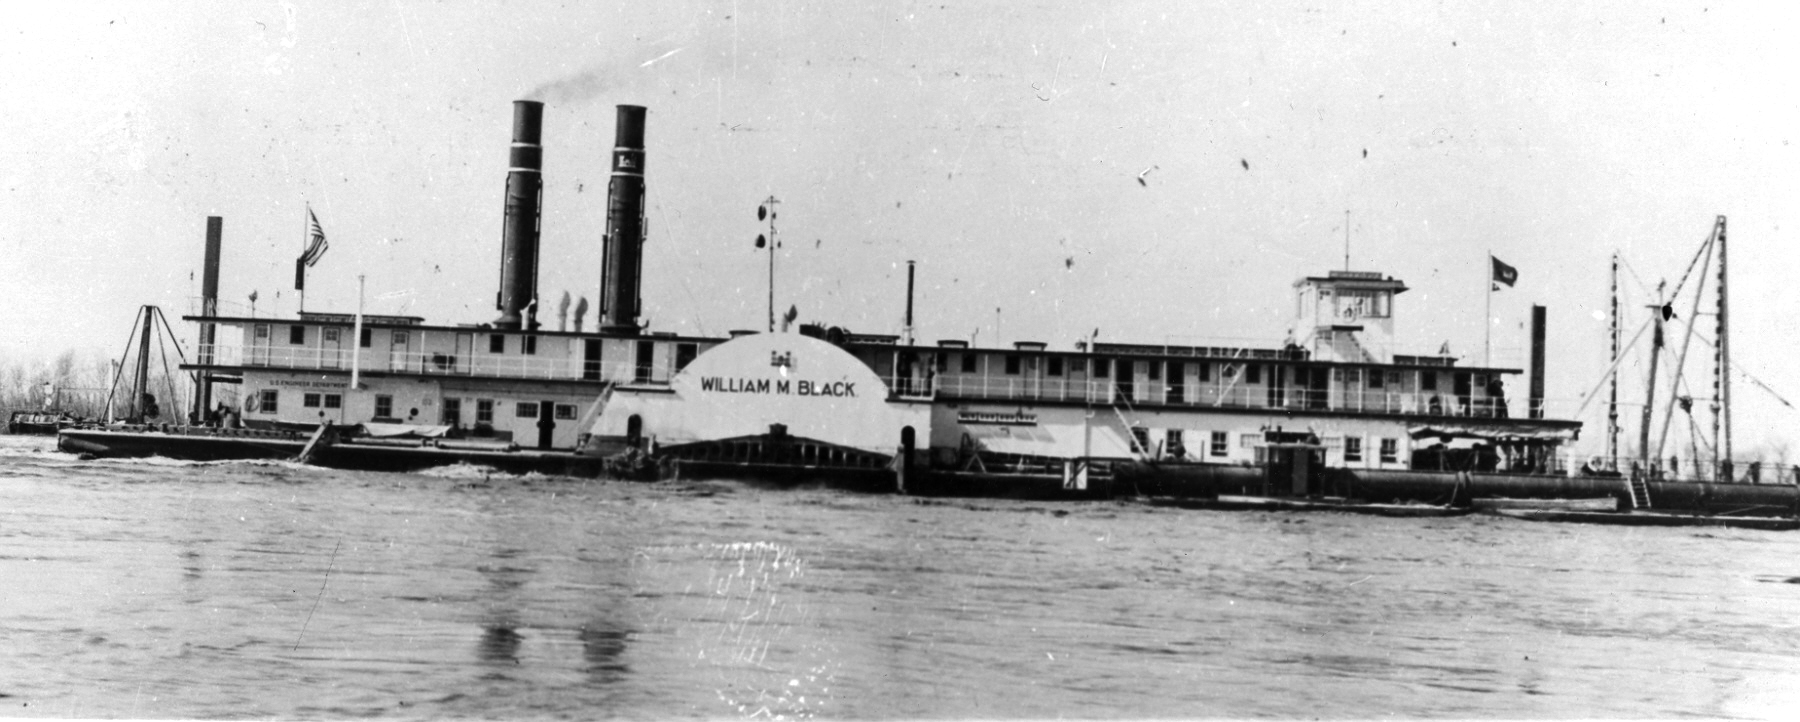 Historic photo of the William M. Black Dredge Boat